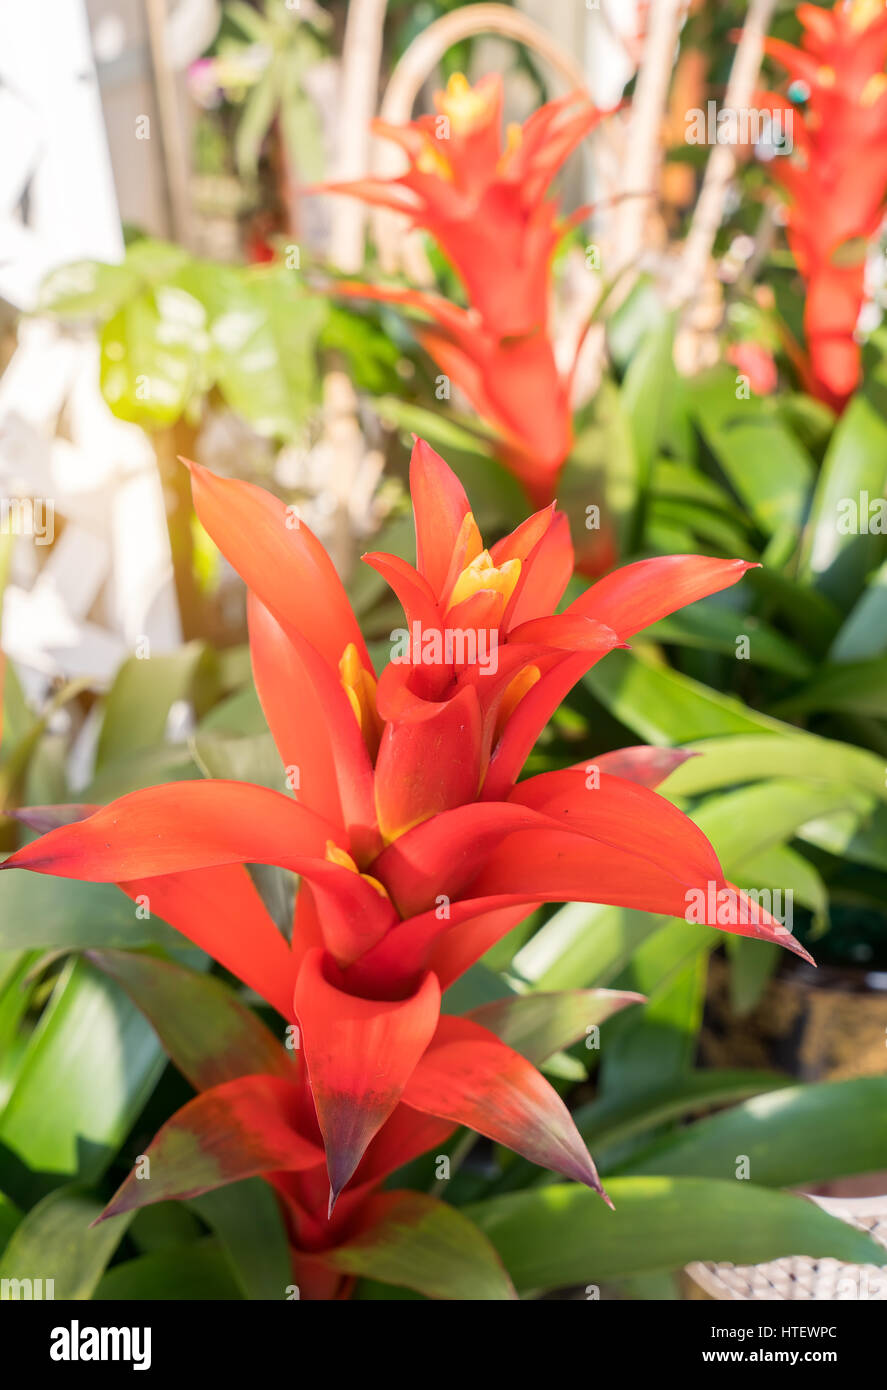 red color of Guzmania flower in garden. Stock Photo